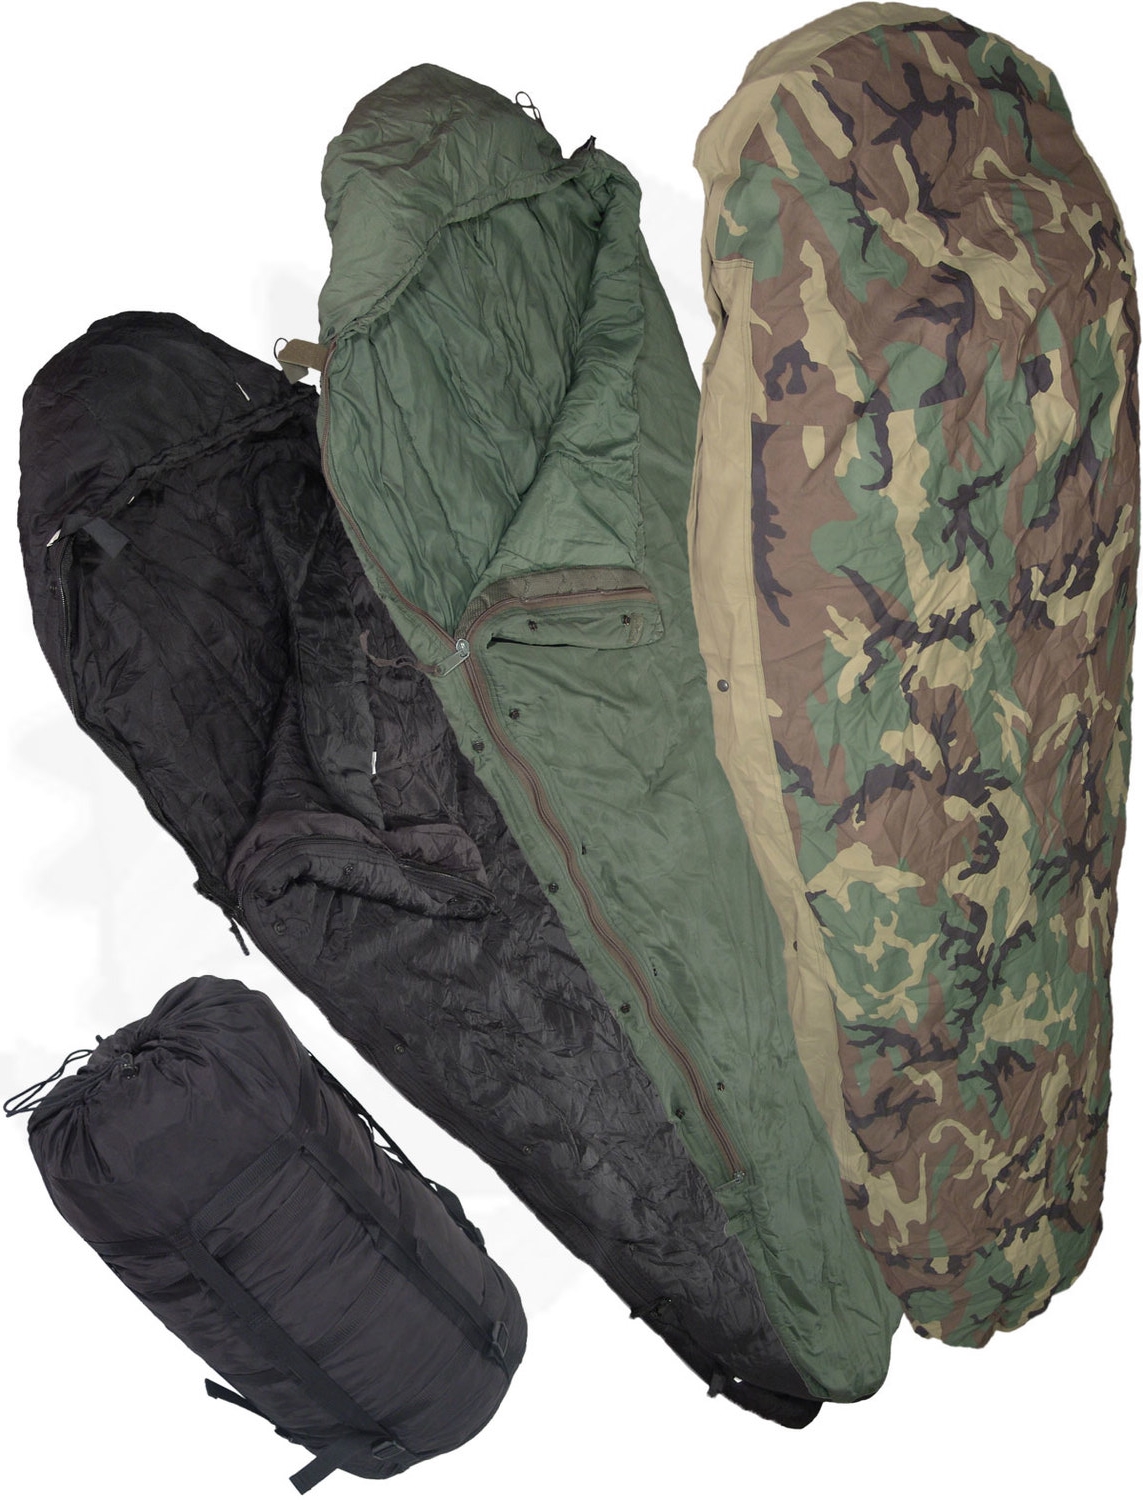 USED OD Genuine US Military Issue Modular Sleeping System Patrol Sleeping Bag 